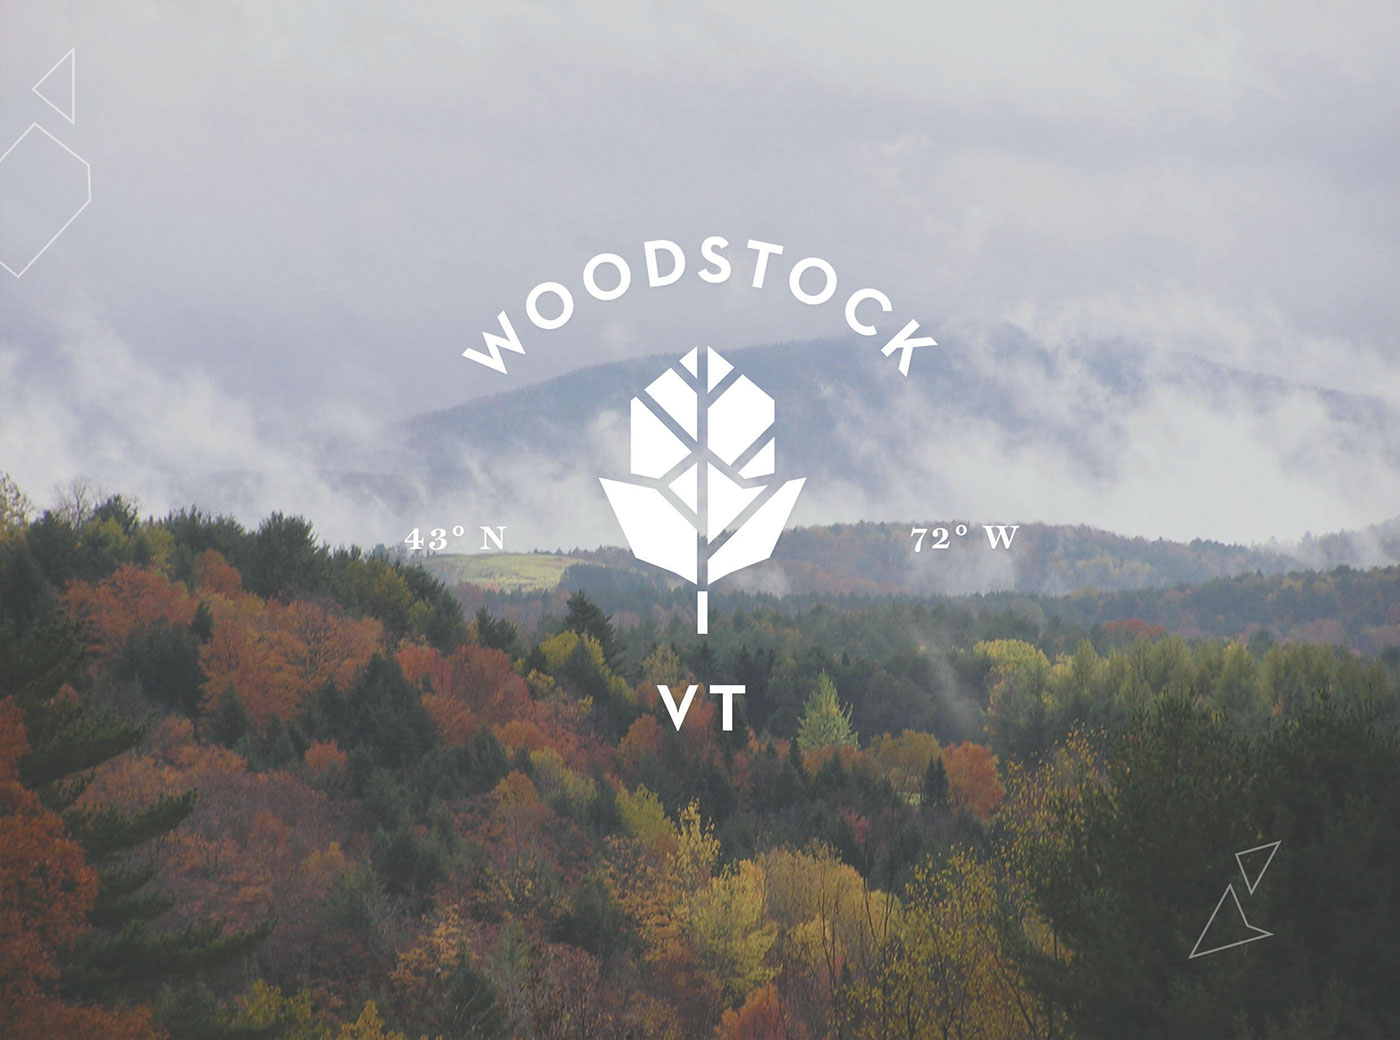 woodstock Vermont artisan rustic brand logo seasons Nature book vt town New England community